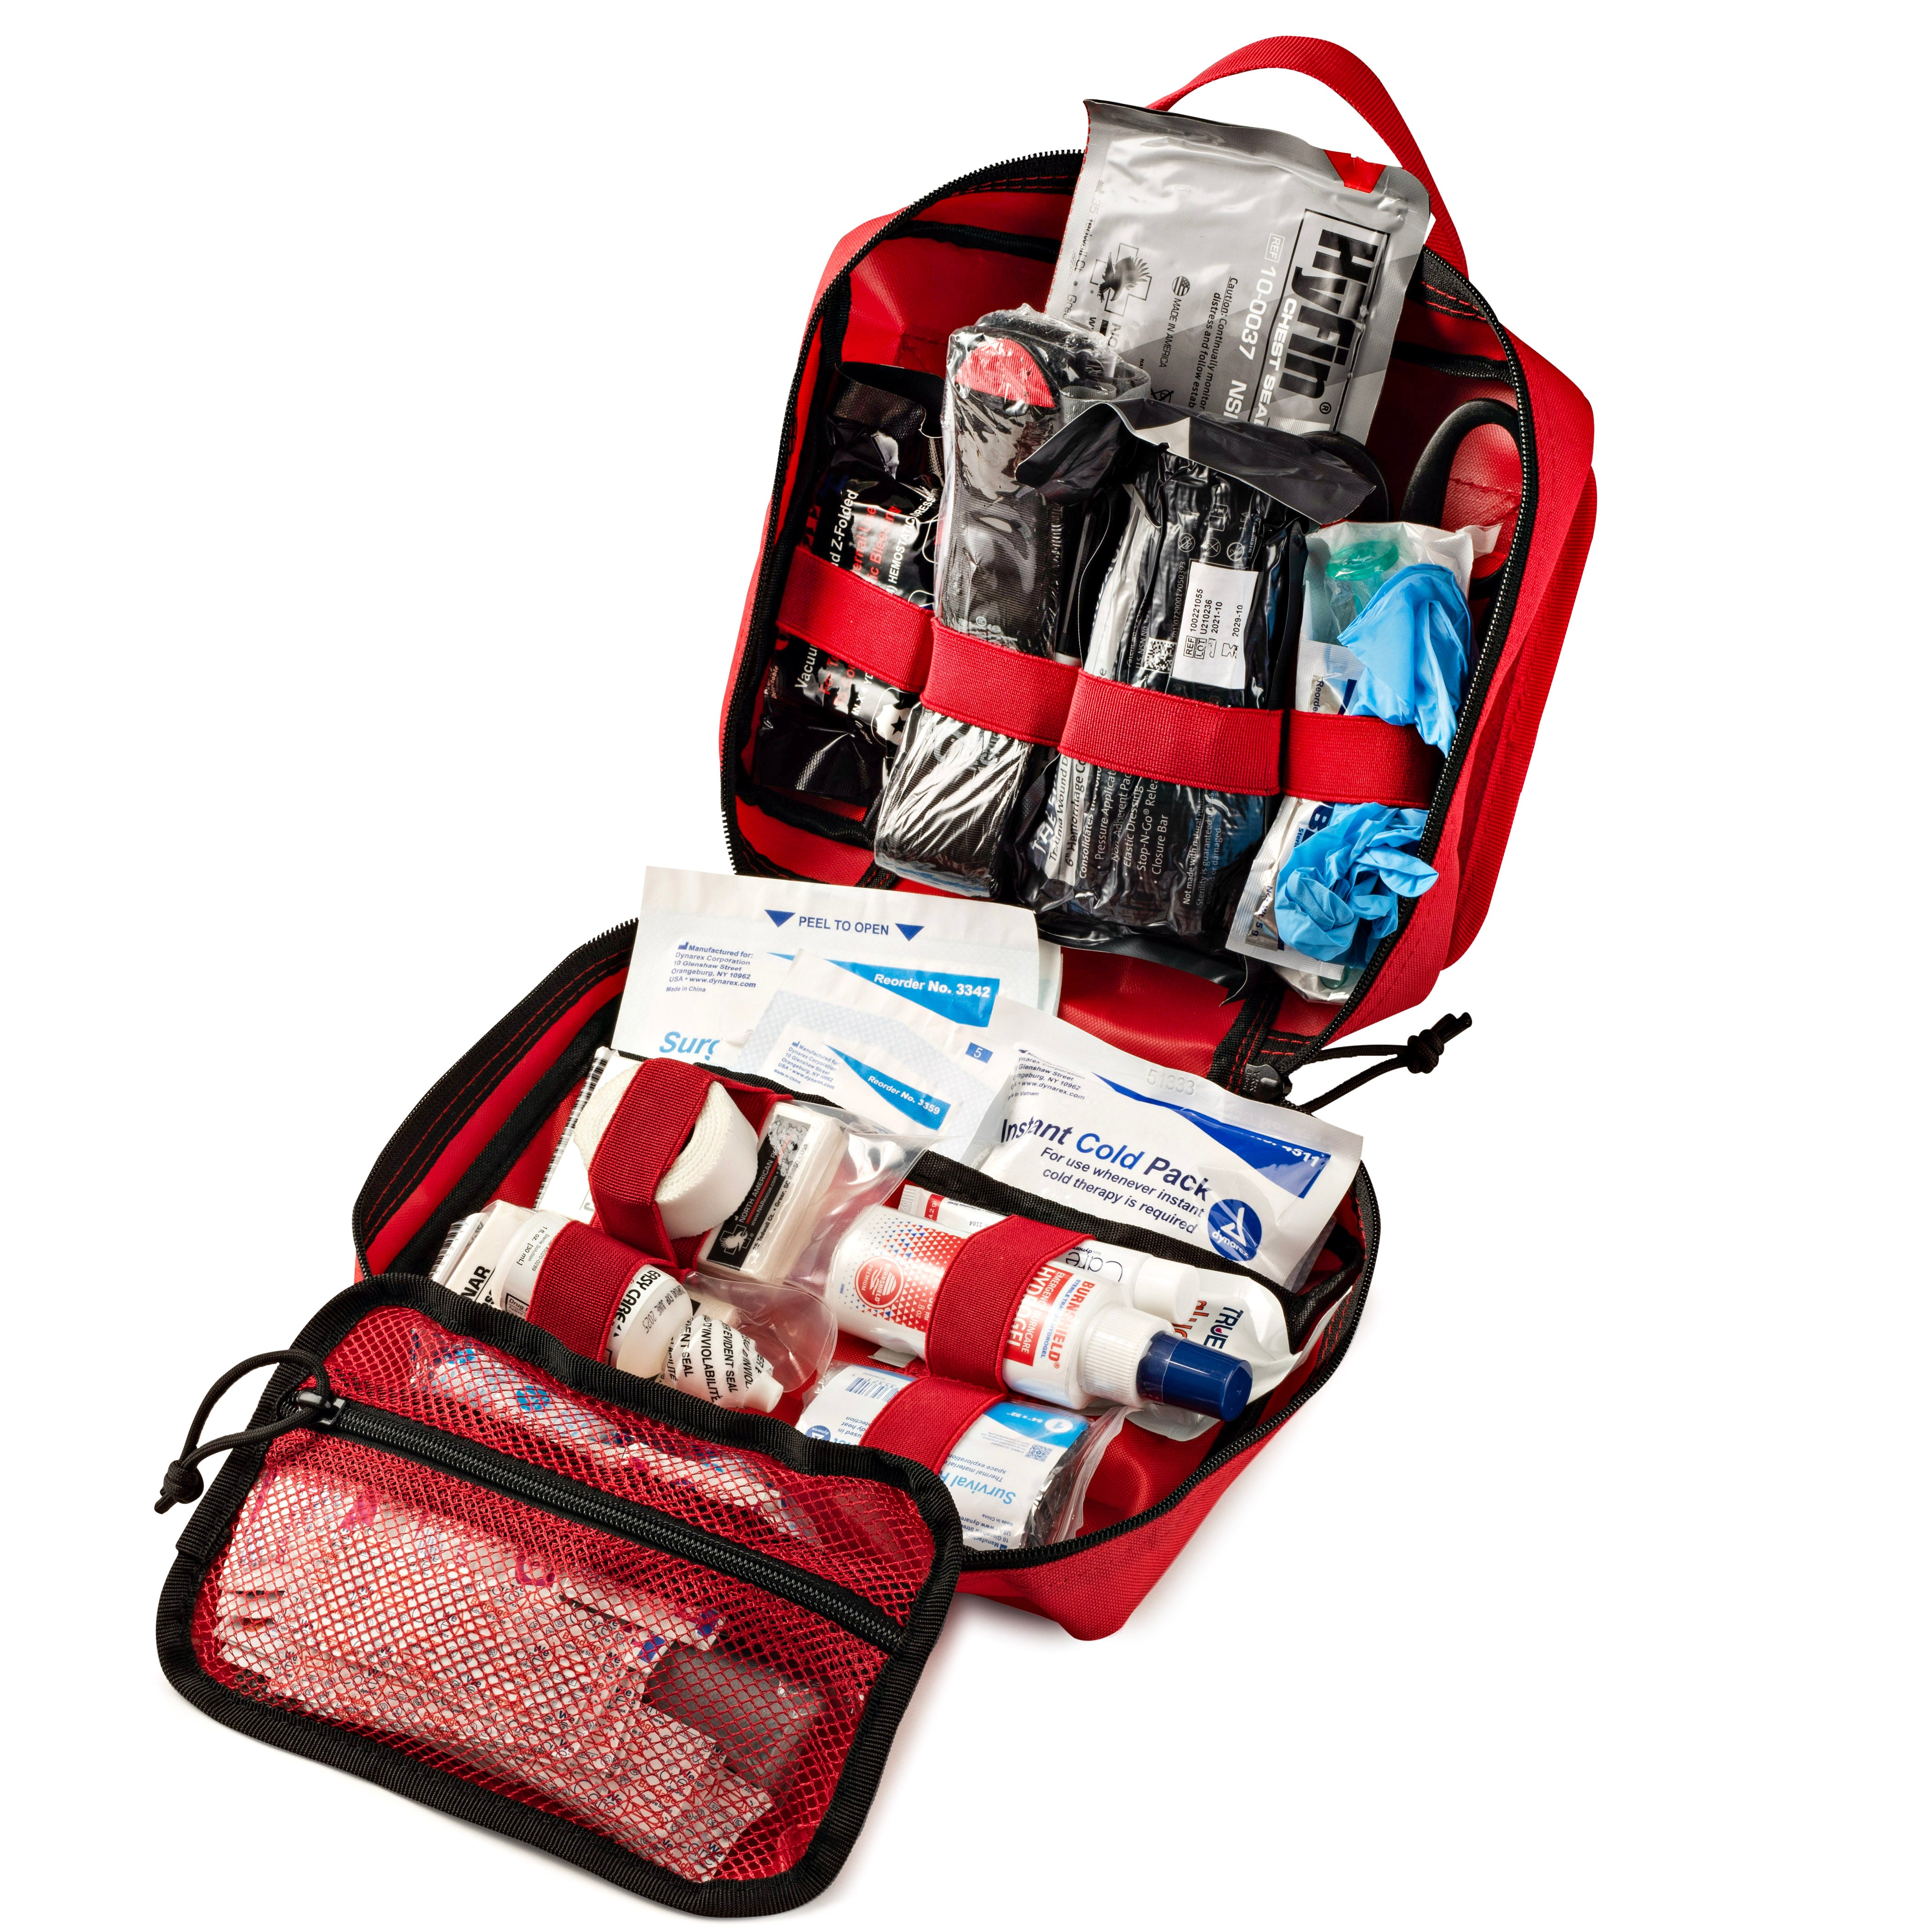 Scherber Vehicle IFAK Emergency Trauma Kit, 95+ Medical Supplies